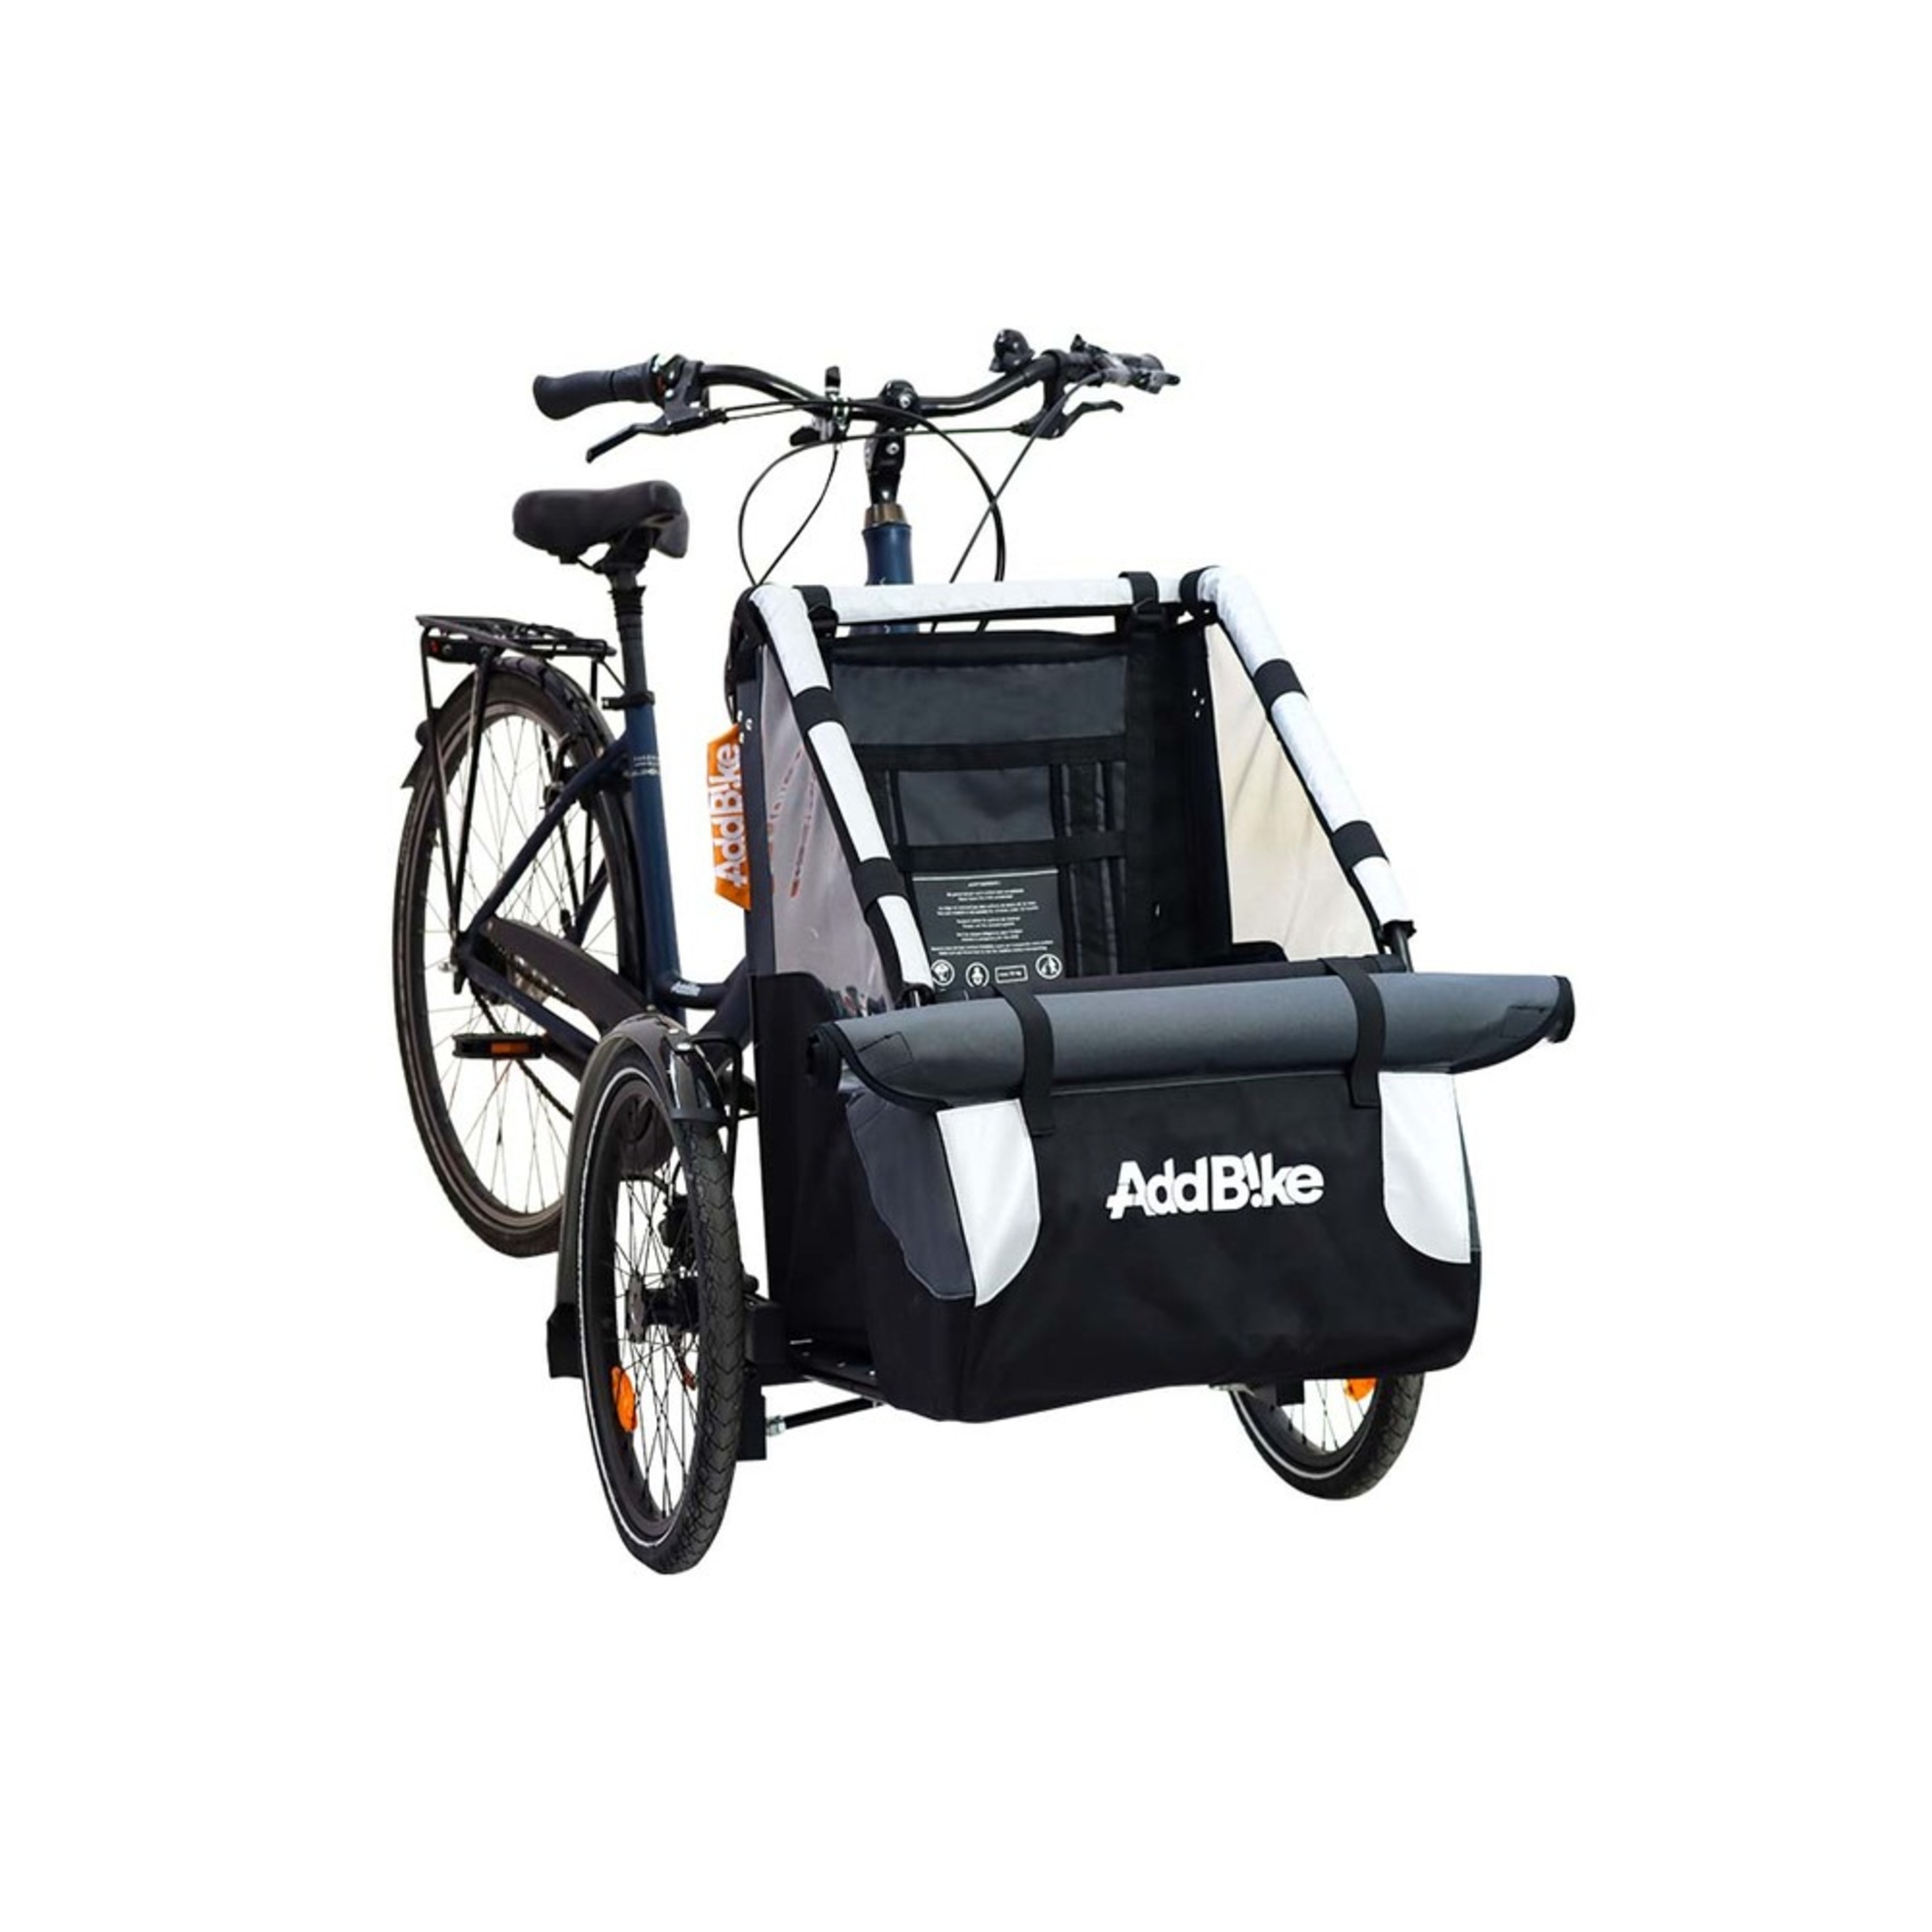 Kit Delantero Addbike Transporte Infantil - gris-negro - 